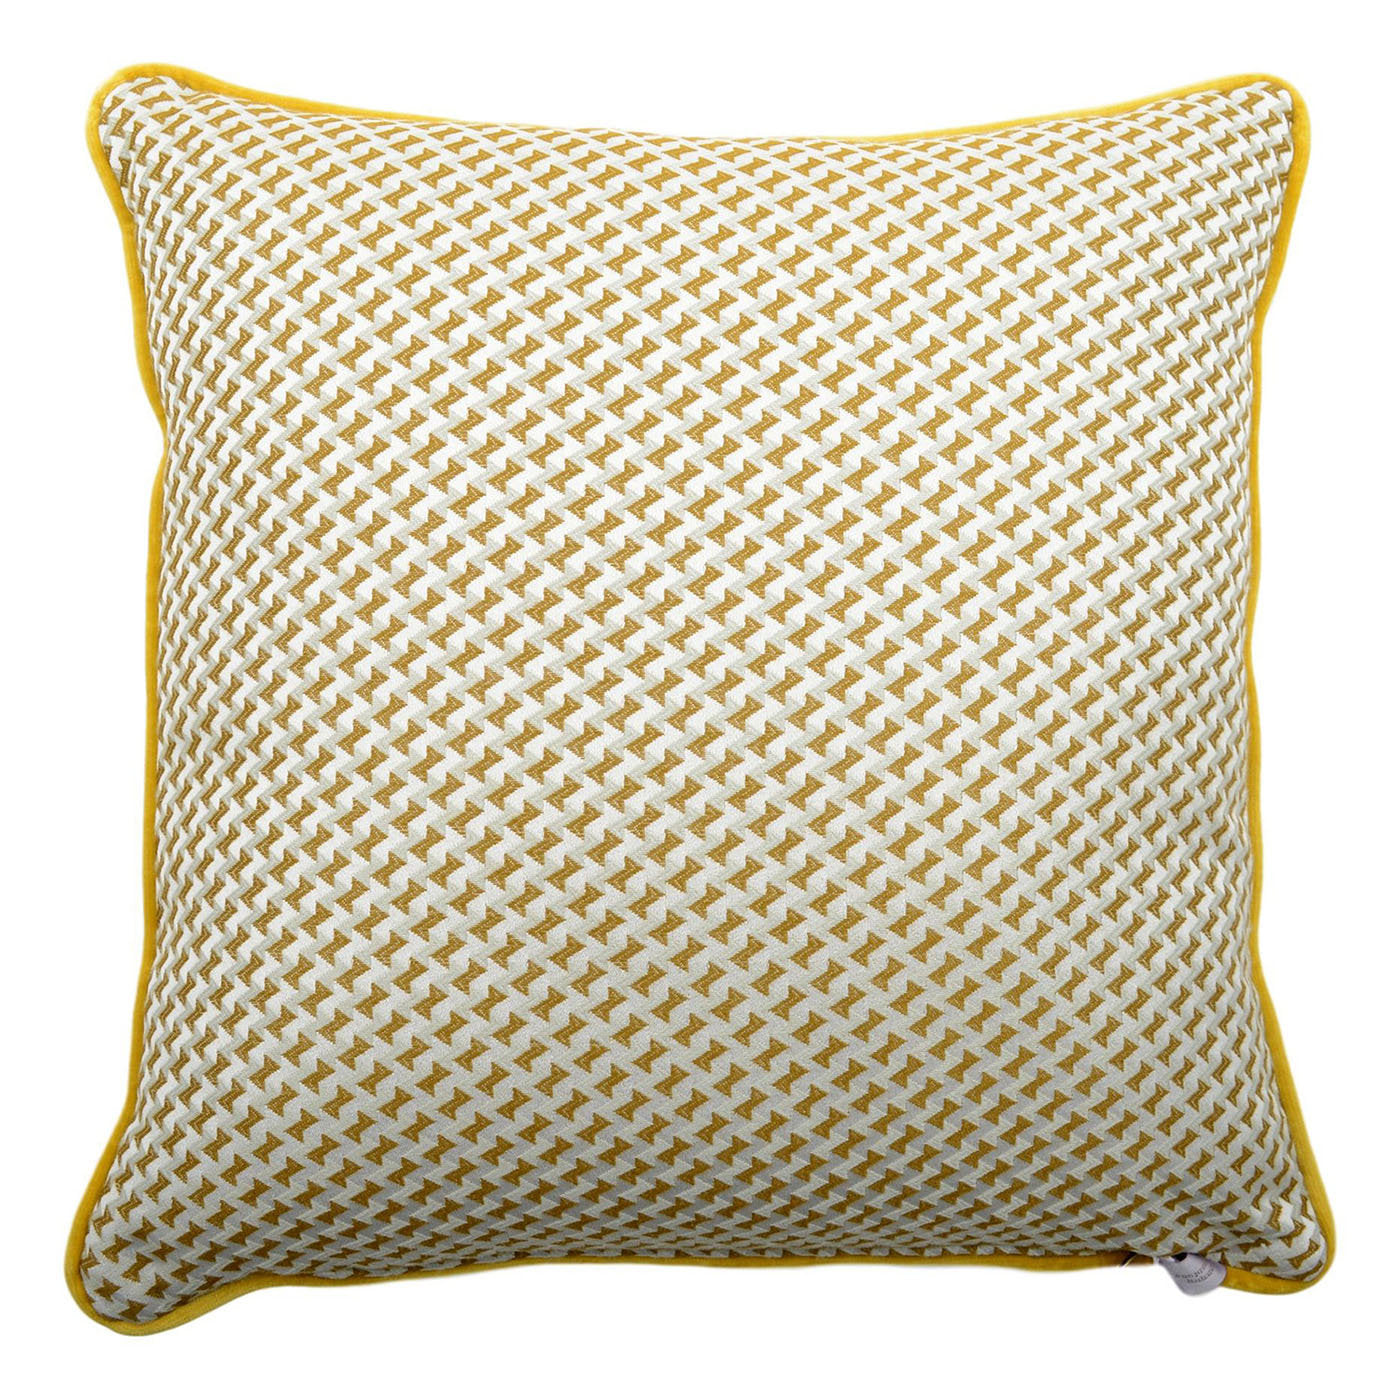 Carrè Cushion in Pied-De-Poule jacquard fabric - Alternative view 2